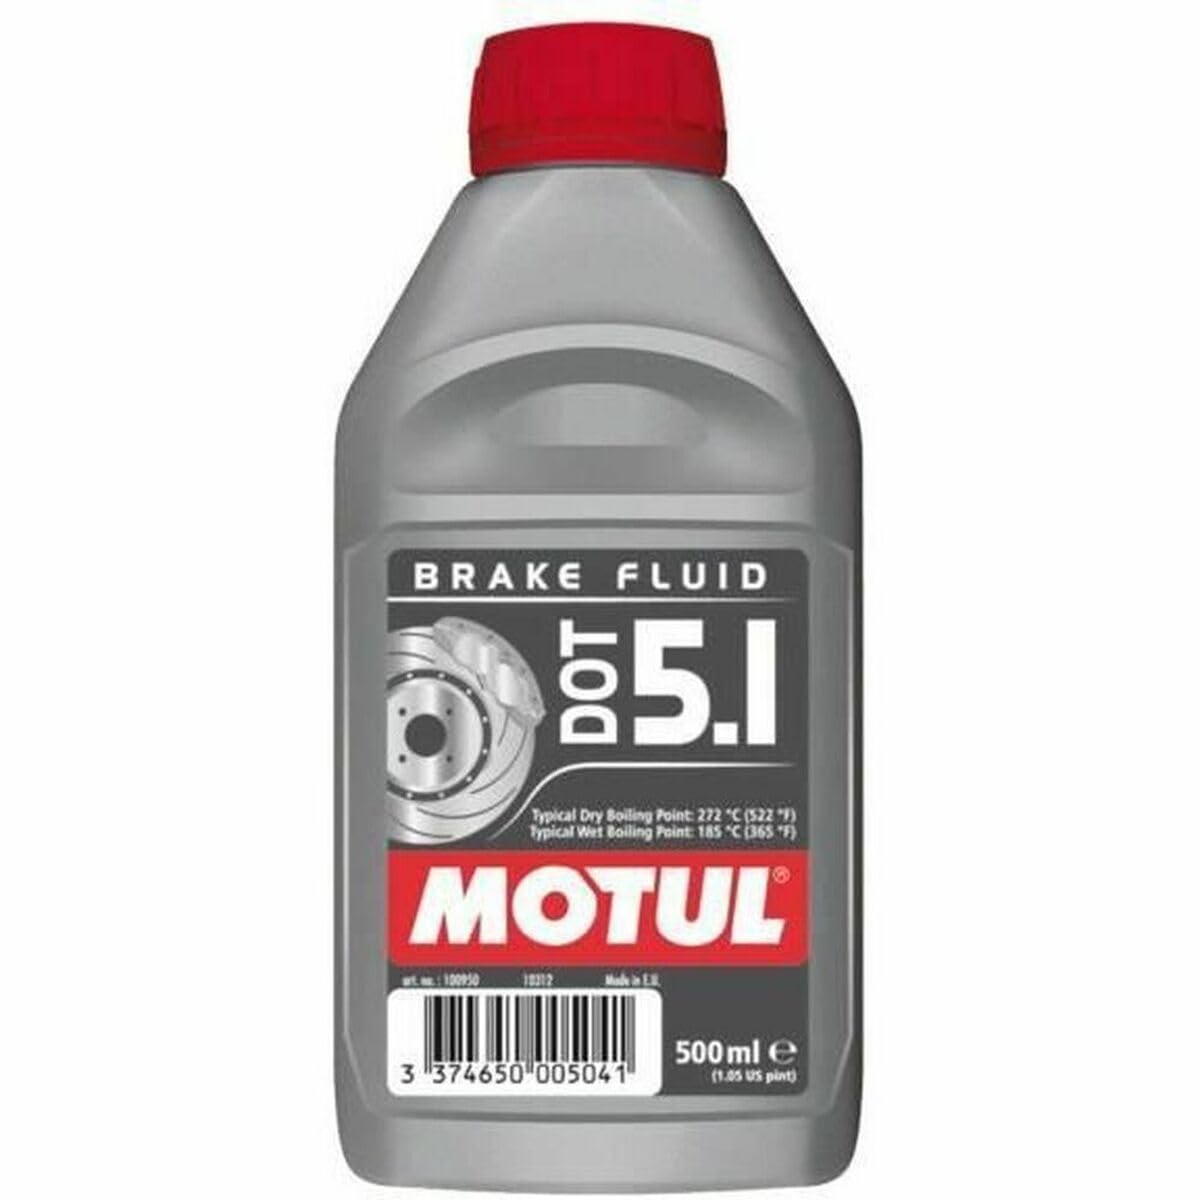 MOTUL(モチュール) DOT5.1 BRAKE FLUID (DOT5.1 ブレーキフルード) [正規品] 500ml 14102231